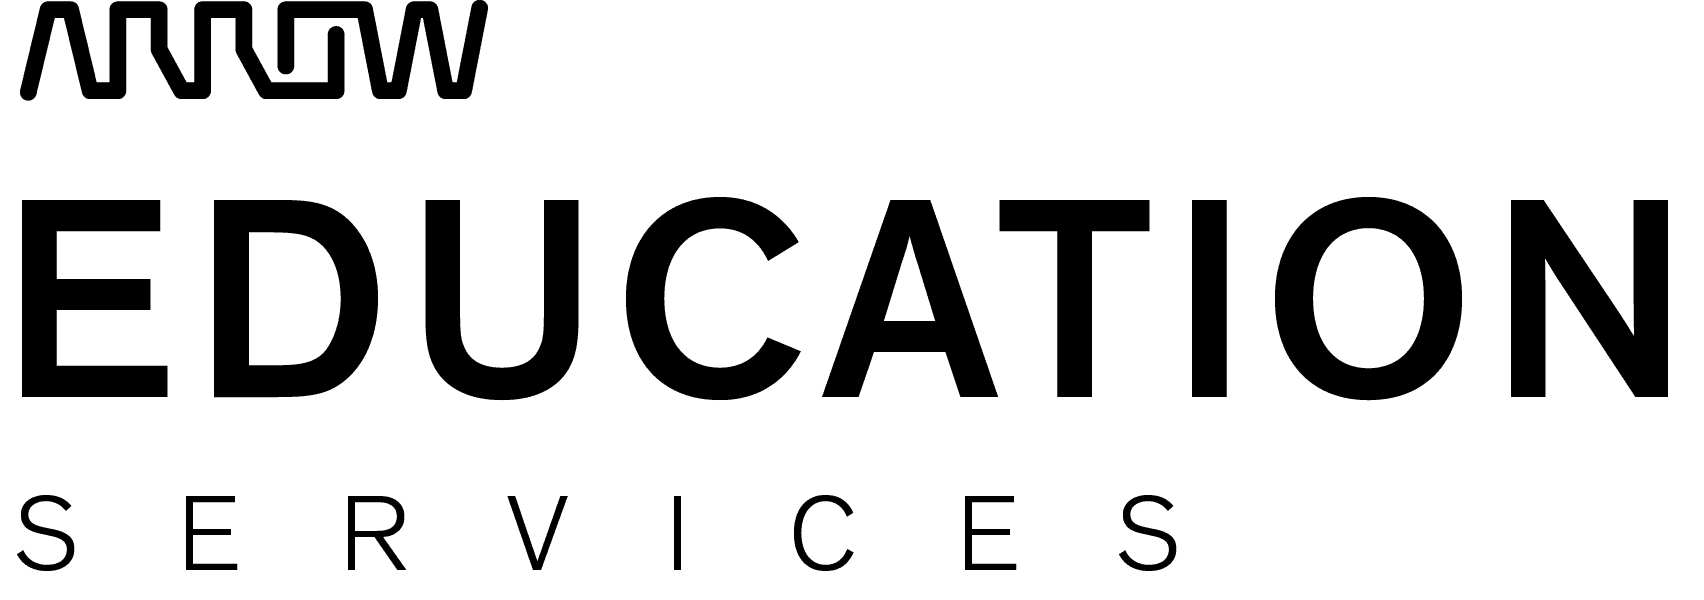 Arrow Education Services Logo